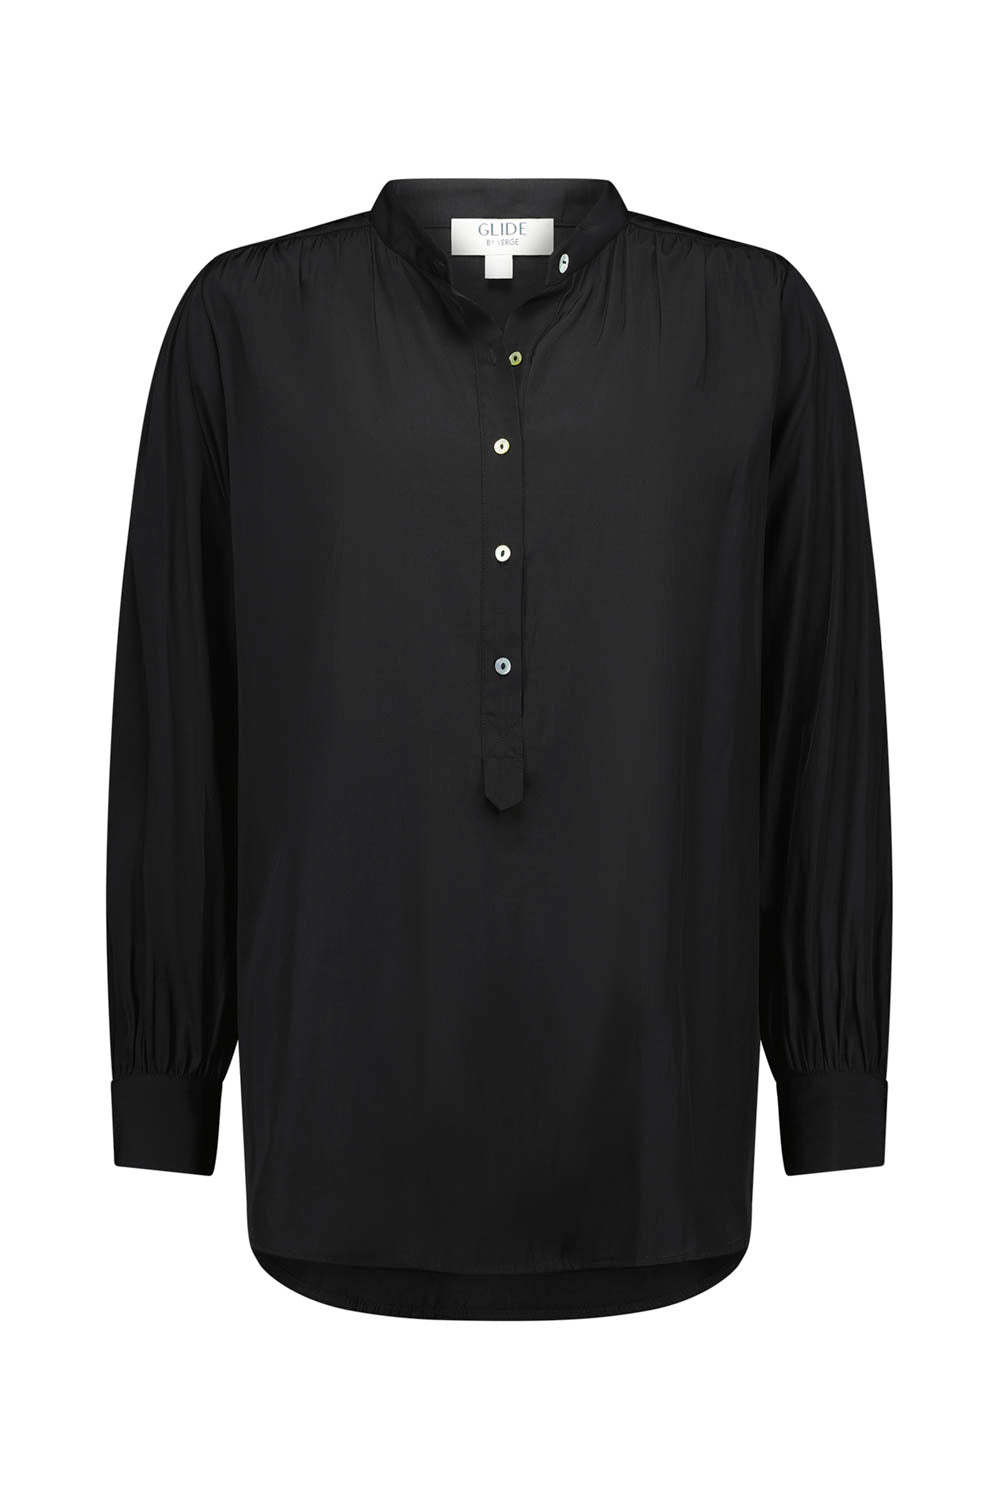 Glide by Verge - Seattle Shirt - Black - Shirt VERGE